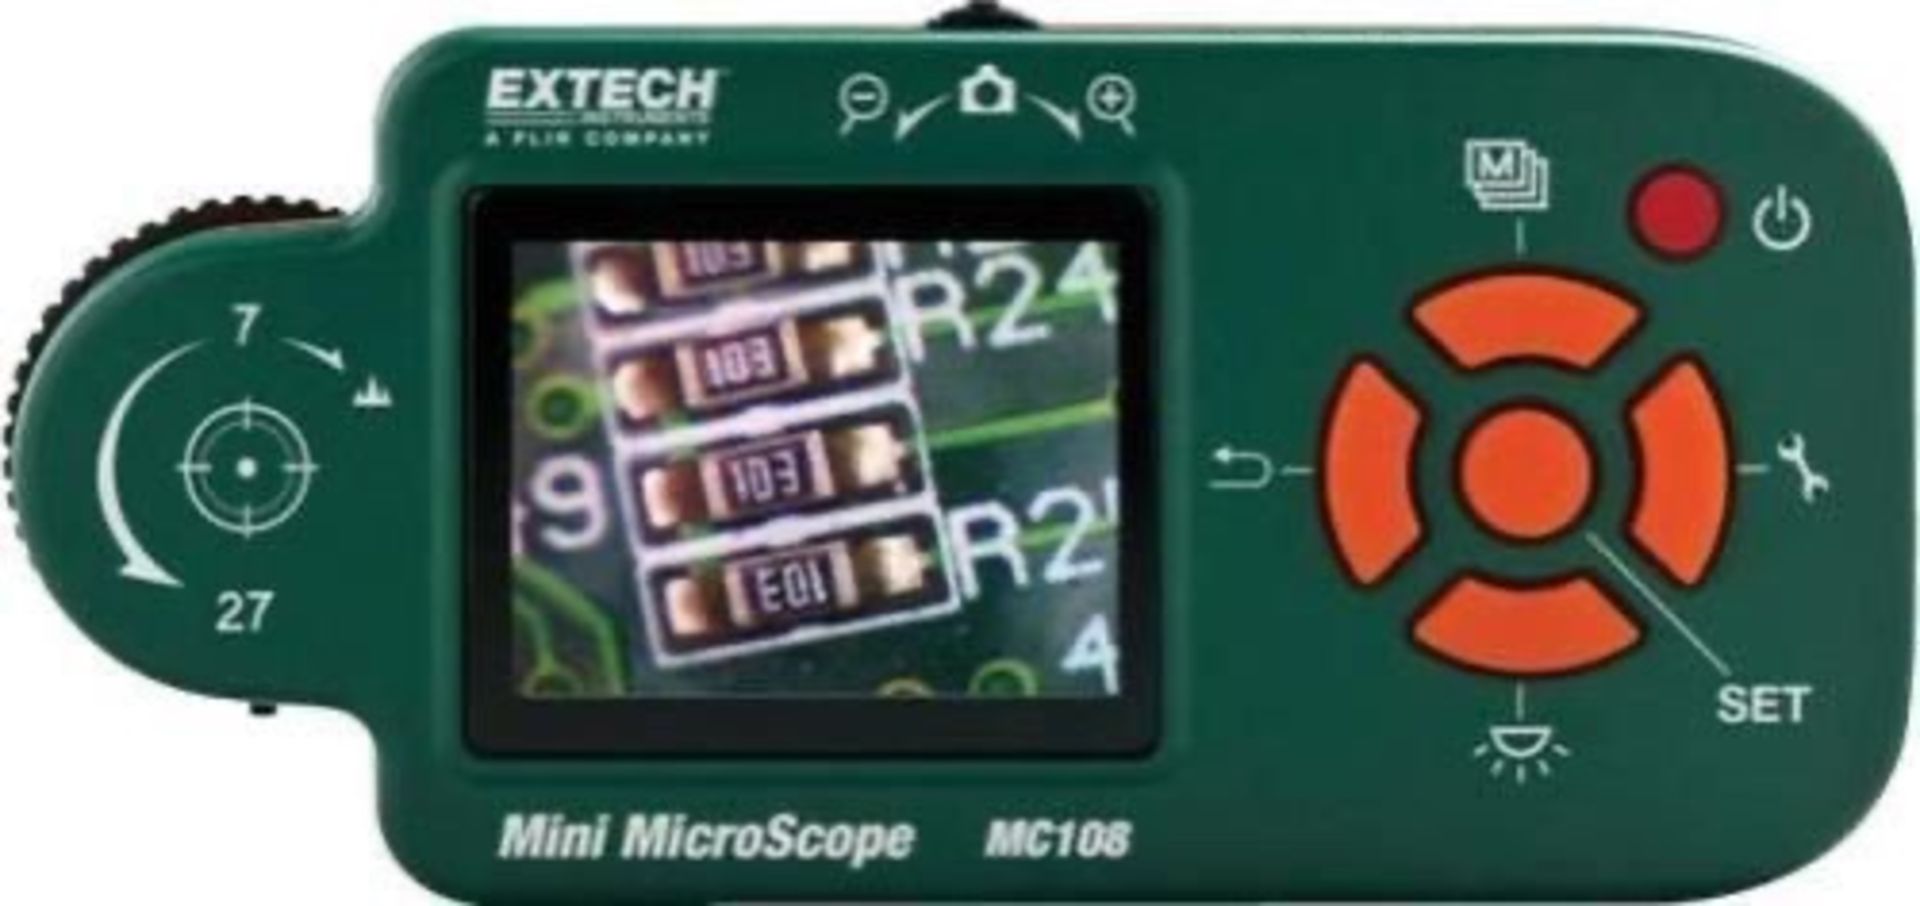 Extech MC108-4 Digital Microscope - Image 4 of 6